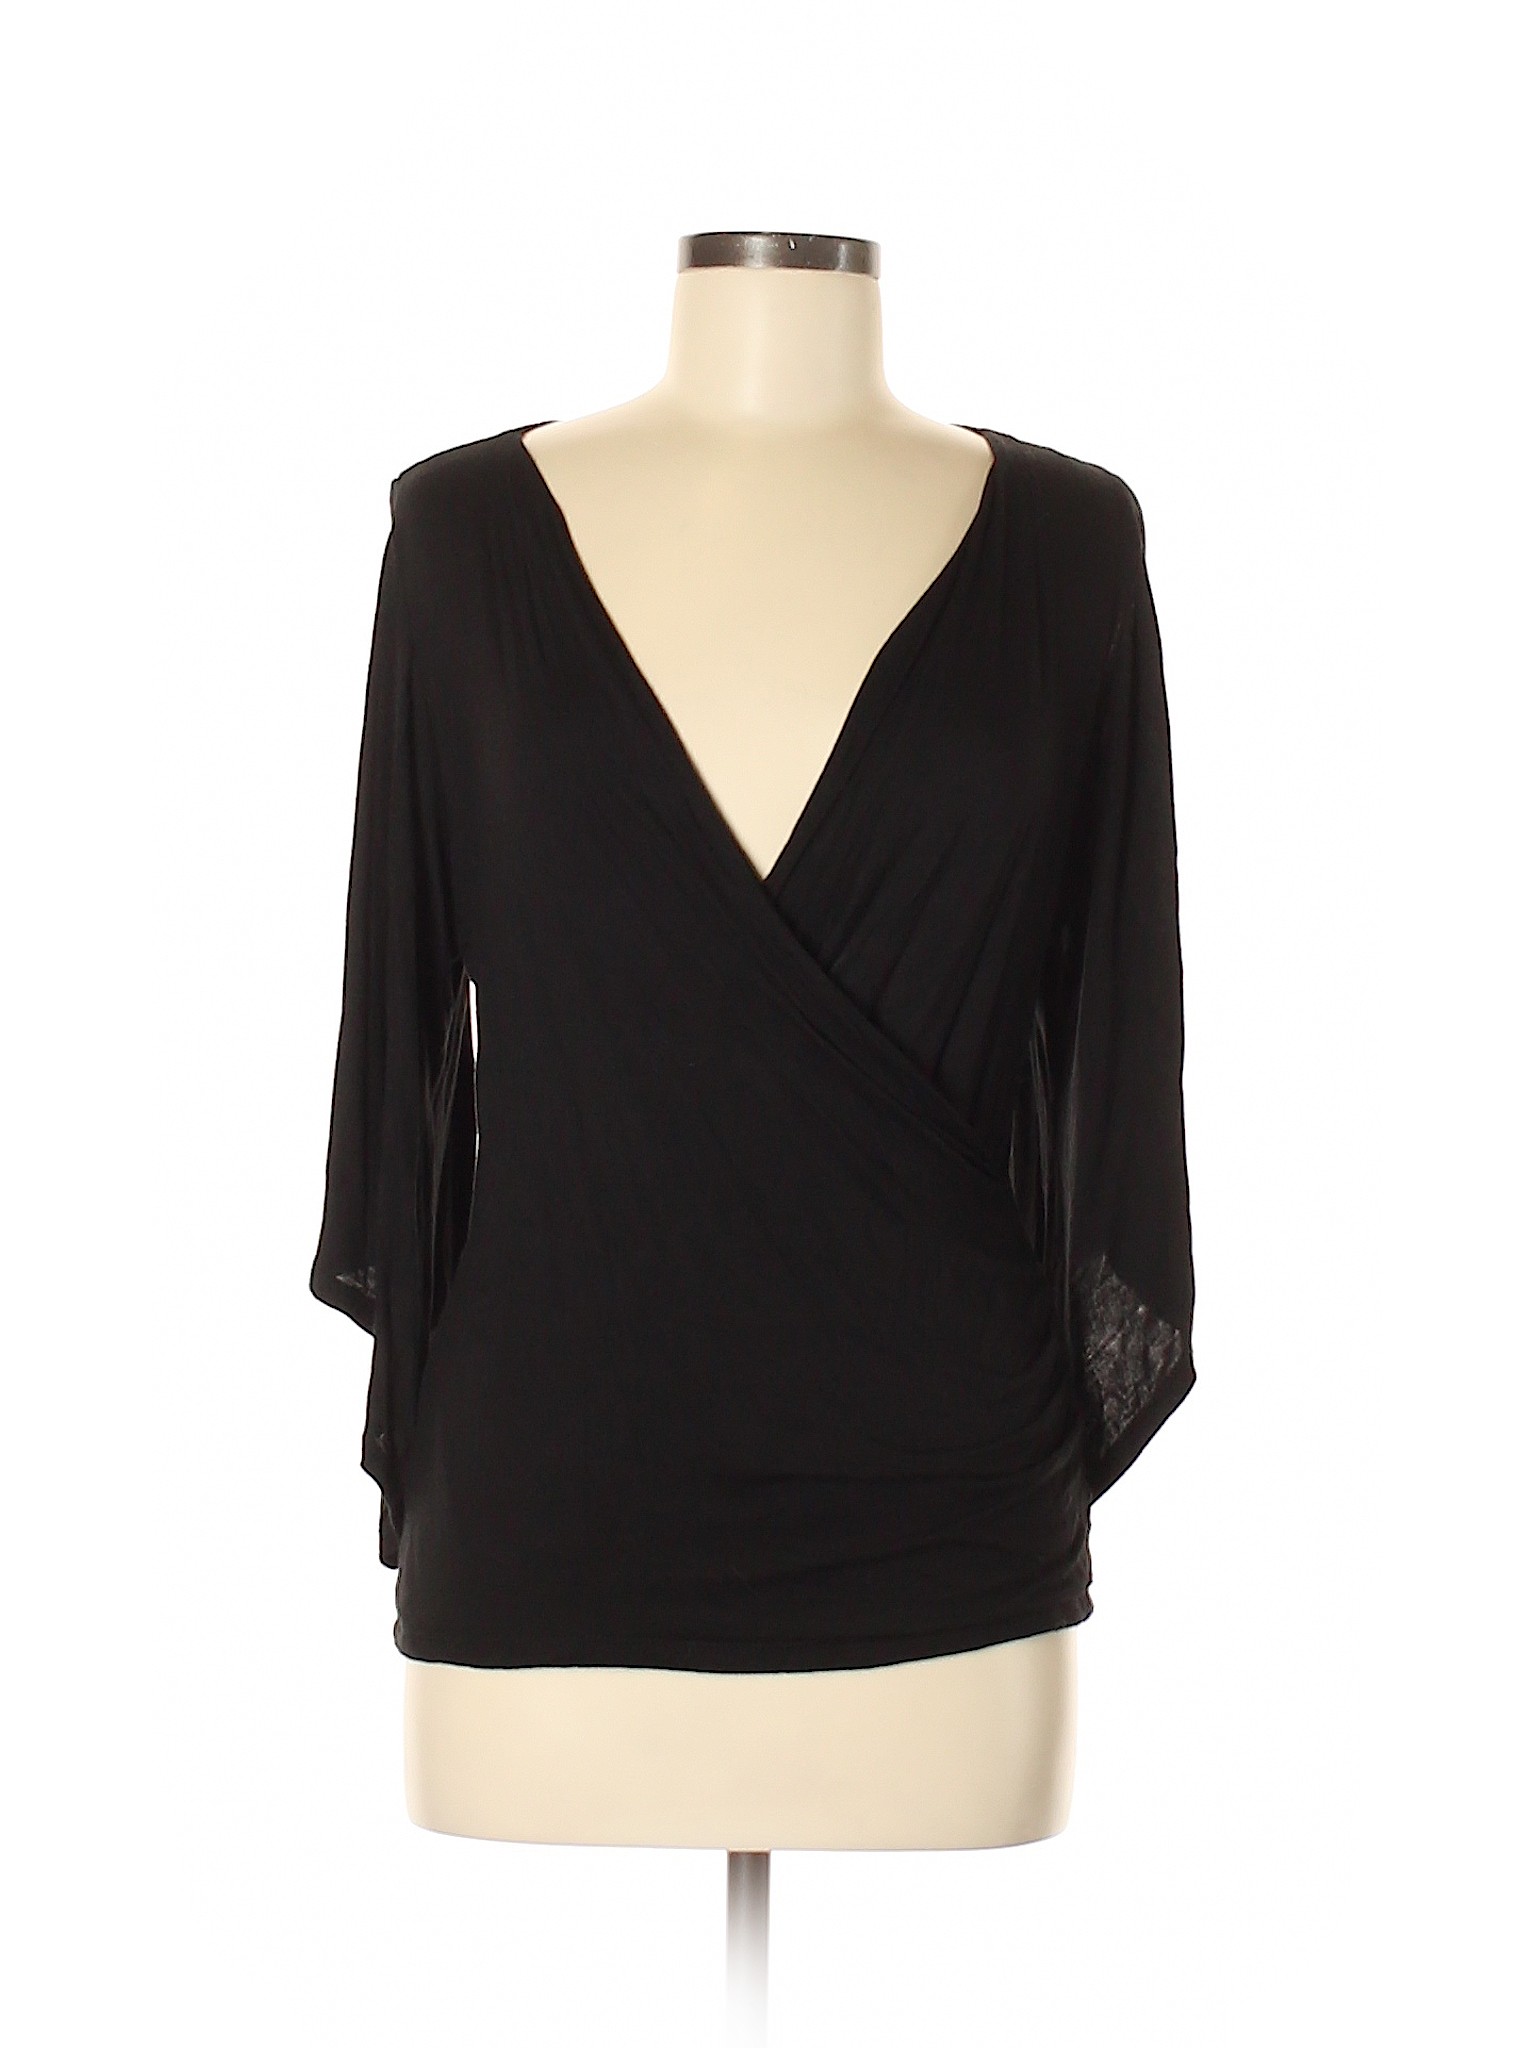 New York & Company Women Black 3/4 Sleeve Top M | eBay